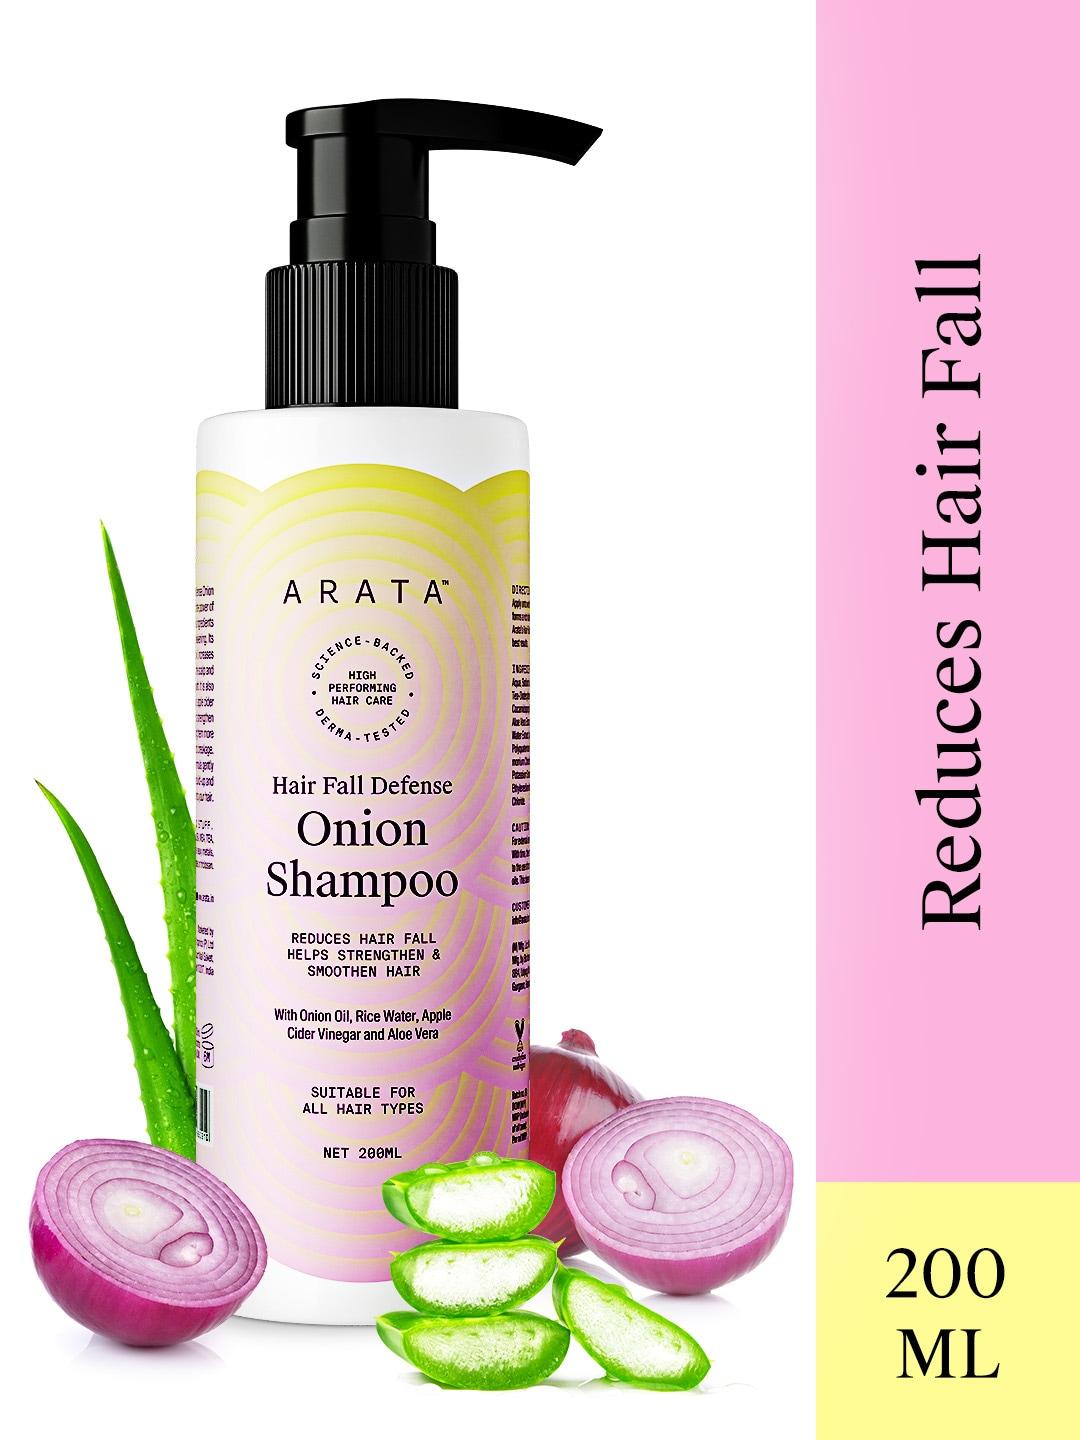 ARATA Hair Fall Defense Onion Shampoo with Rice Water & Apple Cider Vinegar - 200 ml